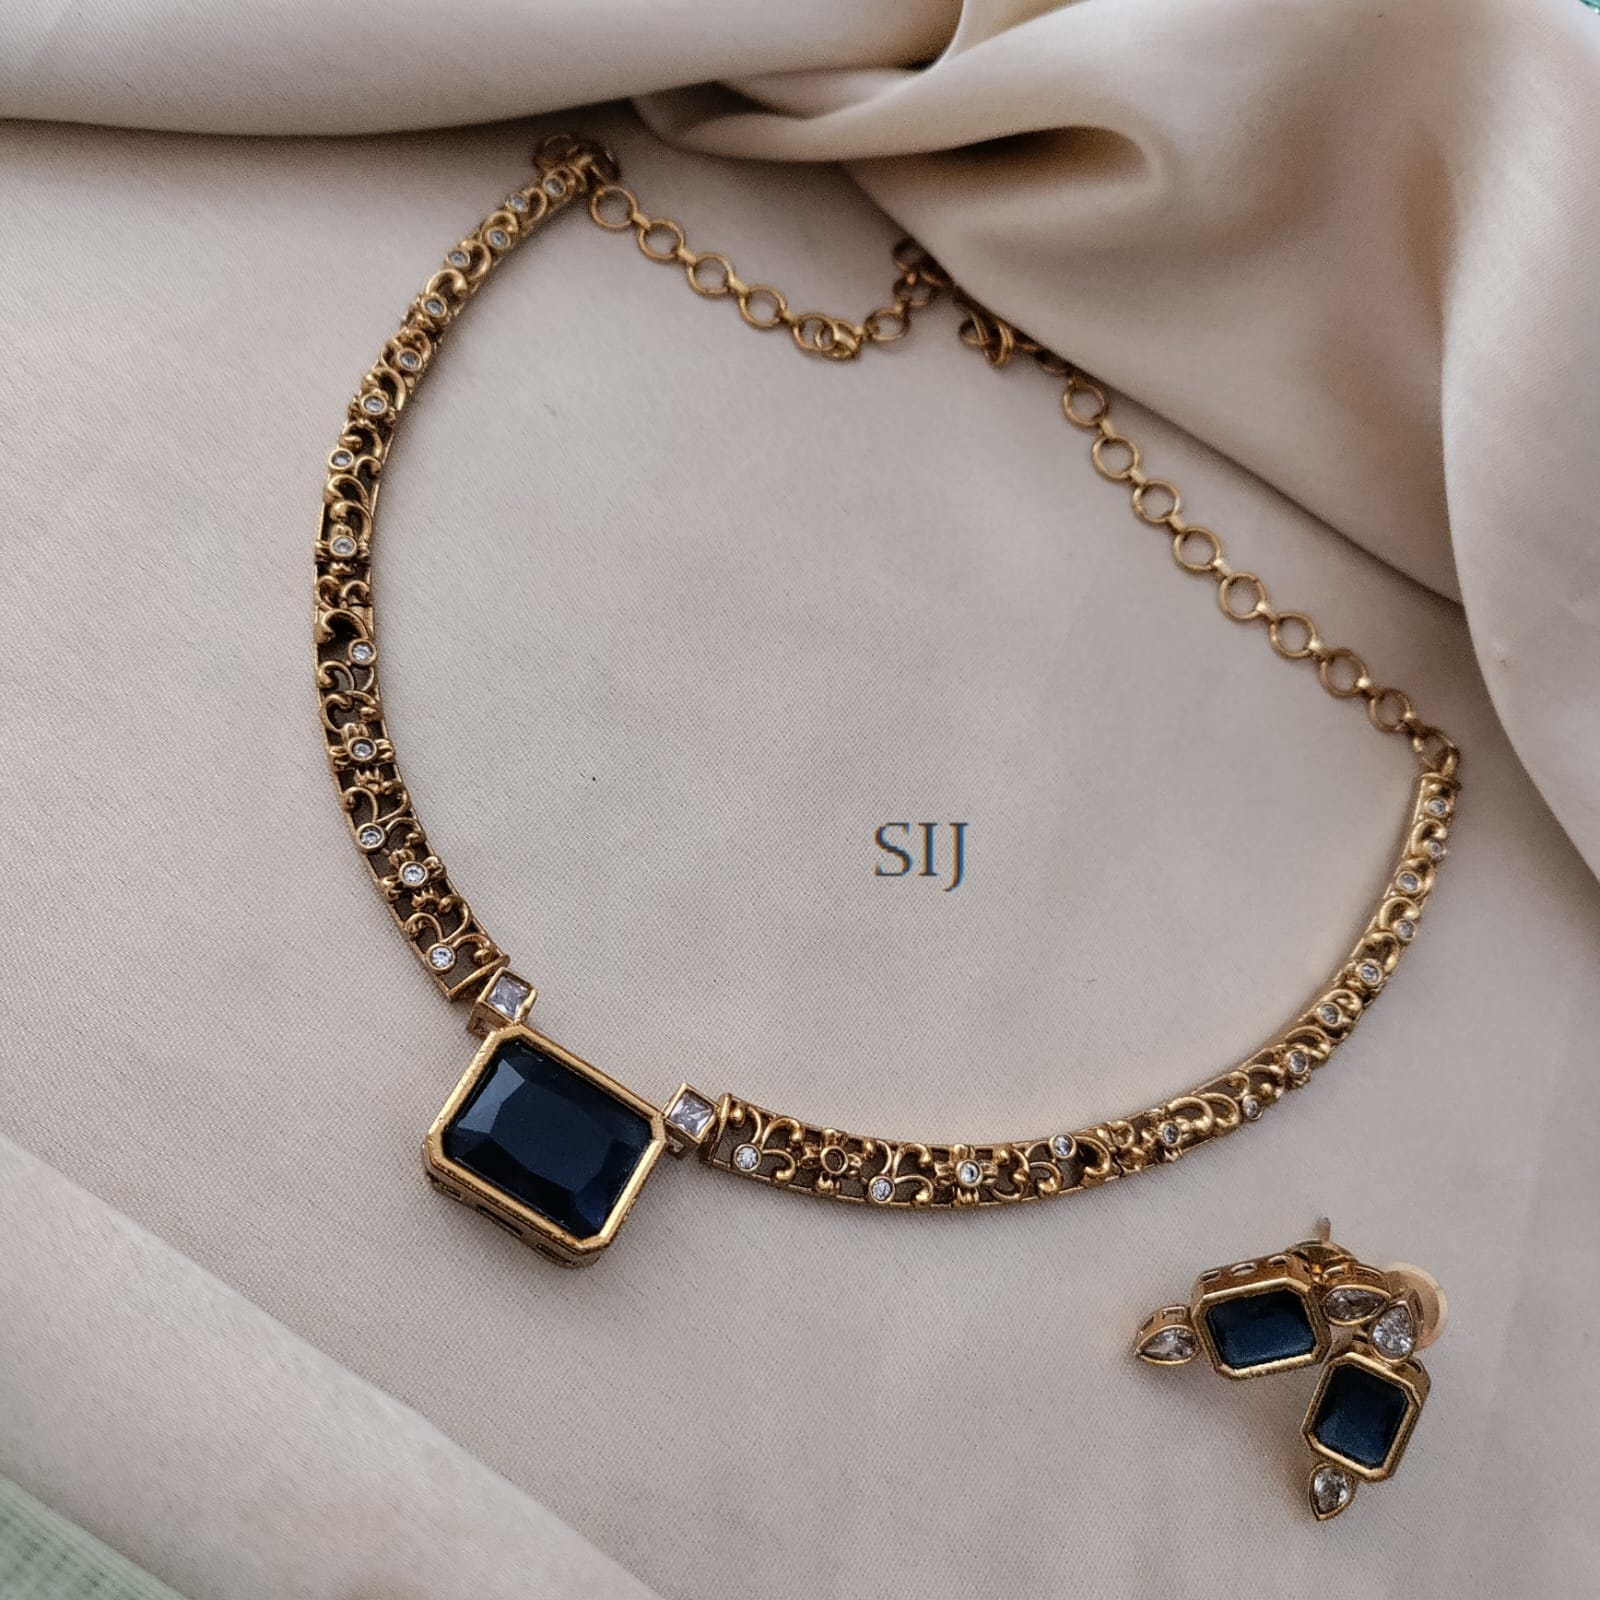 Imitation Hasli Necklace With Small Pendant